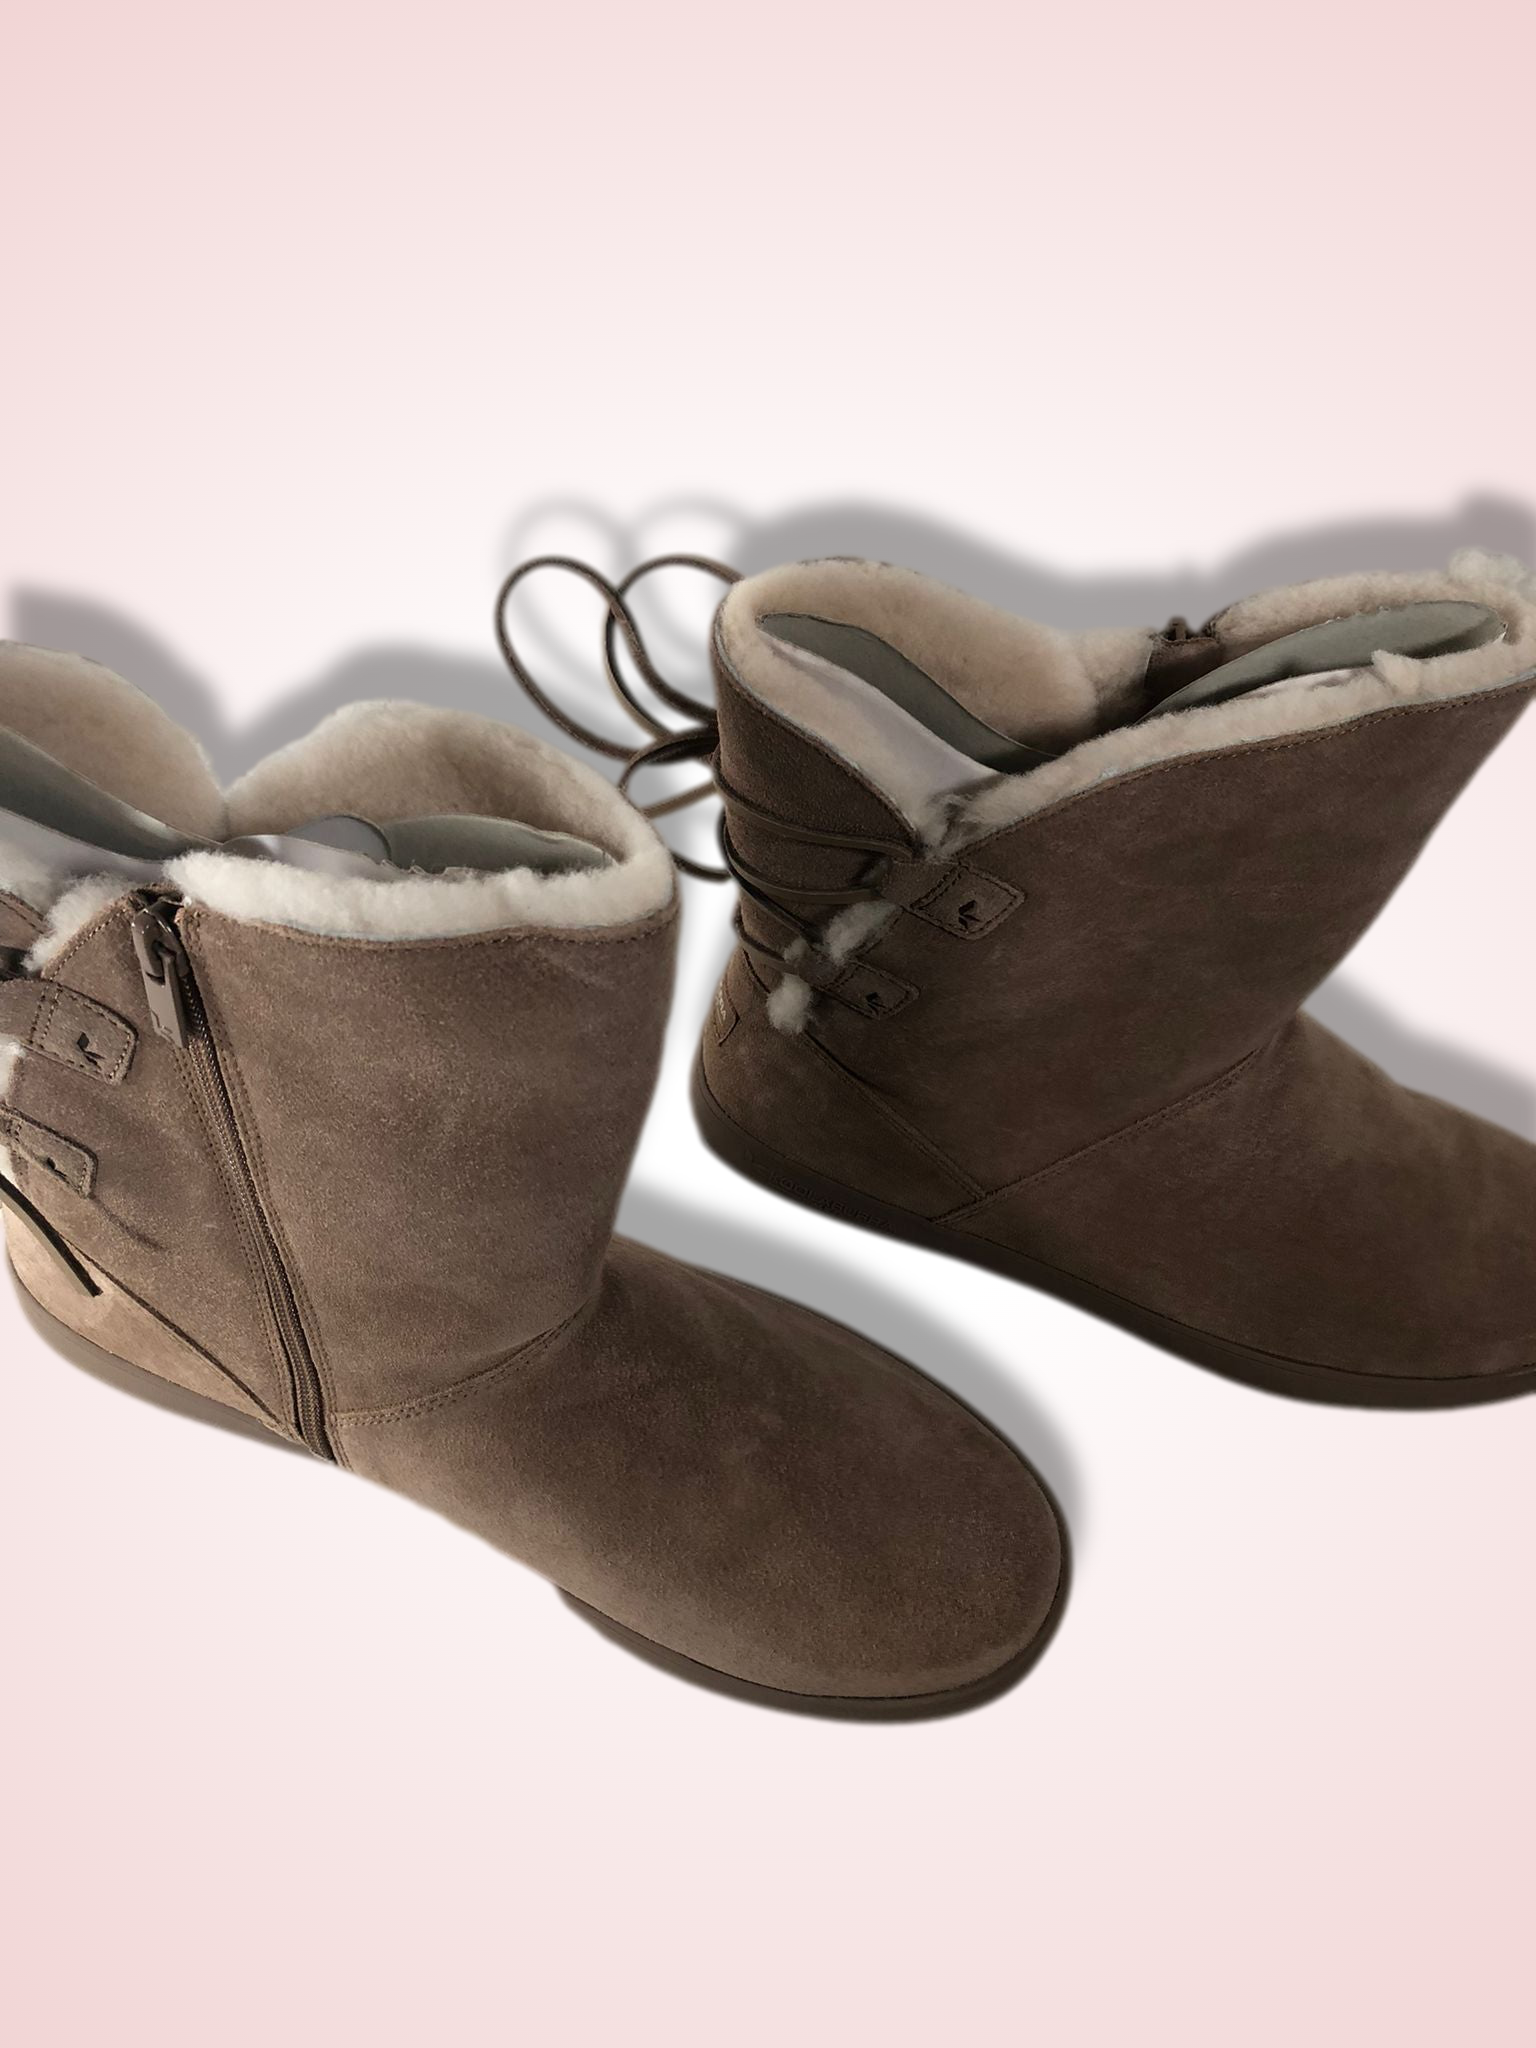 Koolaburra by UGG Suede Tie Back Short Boots - Shazi